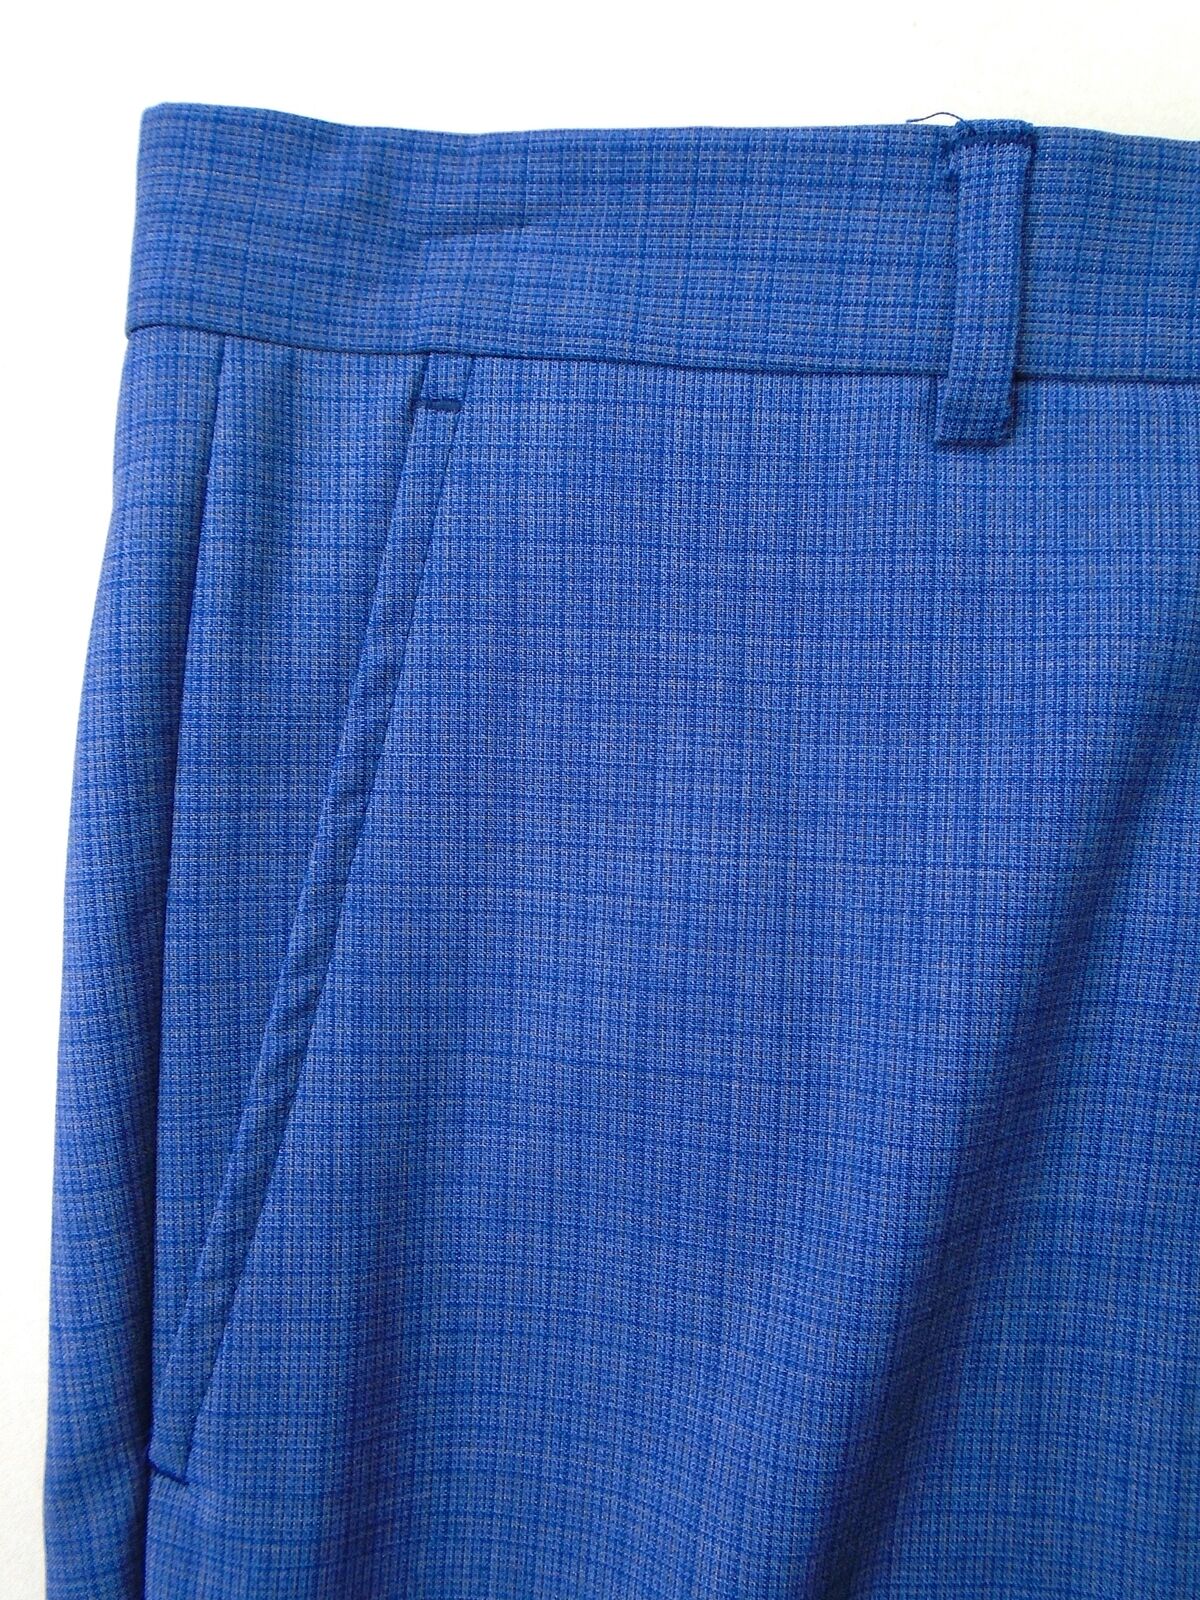 A|X ARMANI EXCHANGE Men's Slim-Fit Dress Pants 30 x 30 Blue Plaid